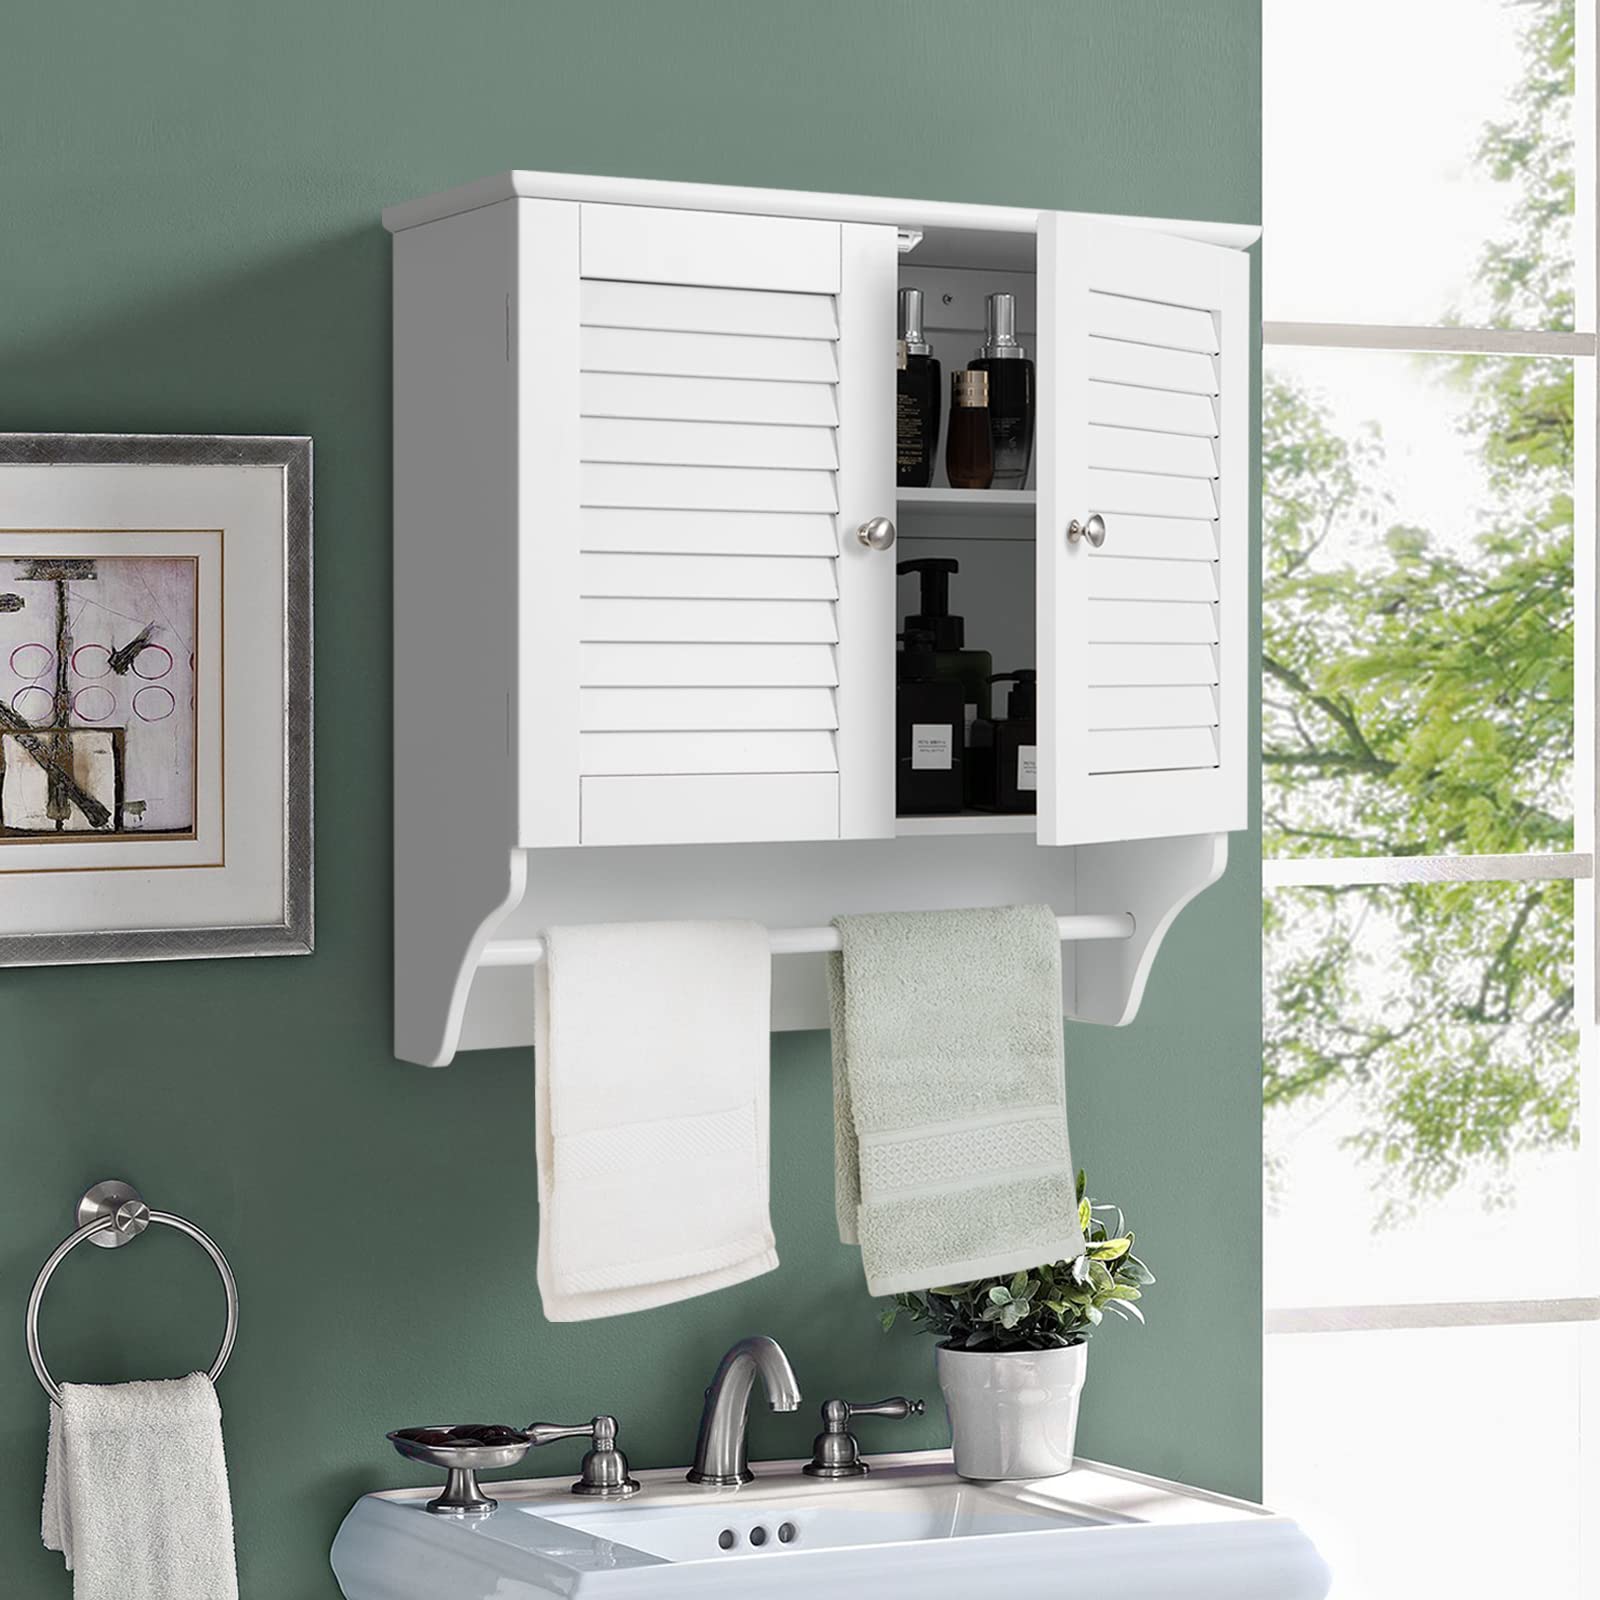 Giantex Bathroom Cabinet Wall Mounted - Hanging Medicine Cabinet